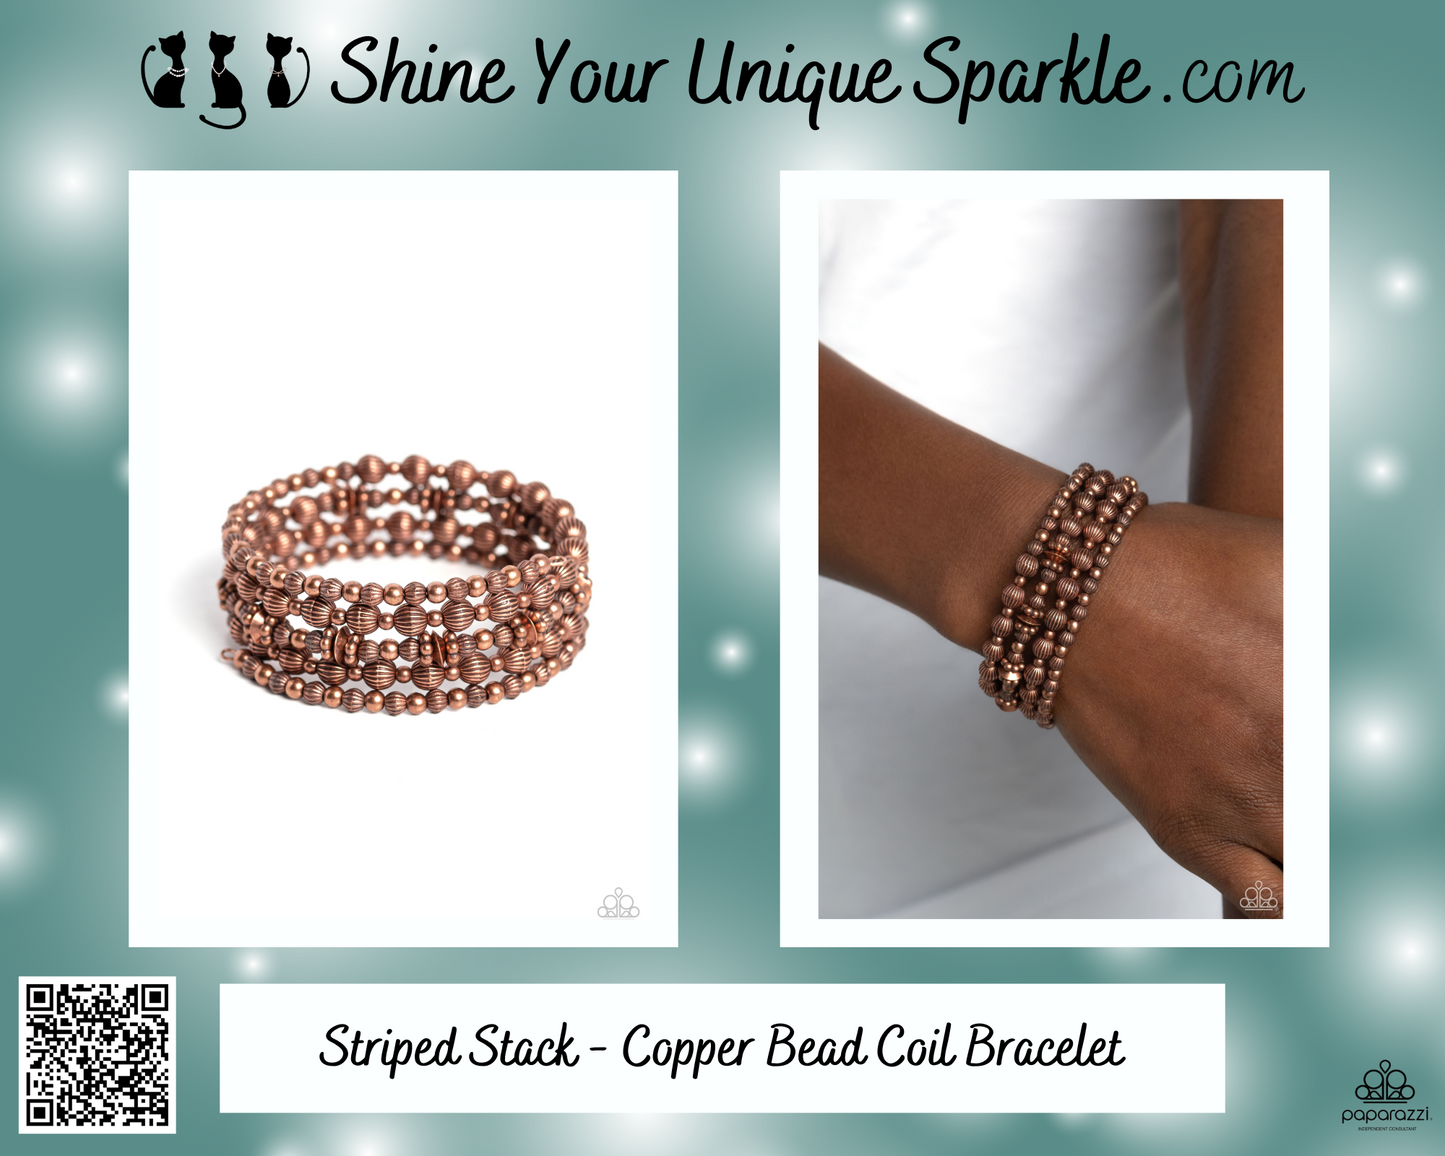 Striped Stack - Copper Bead Coil Bracelet